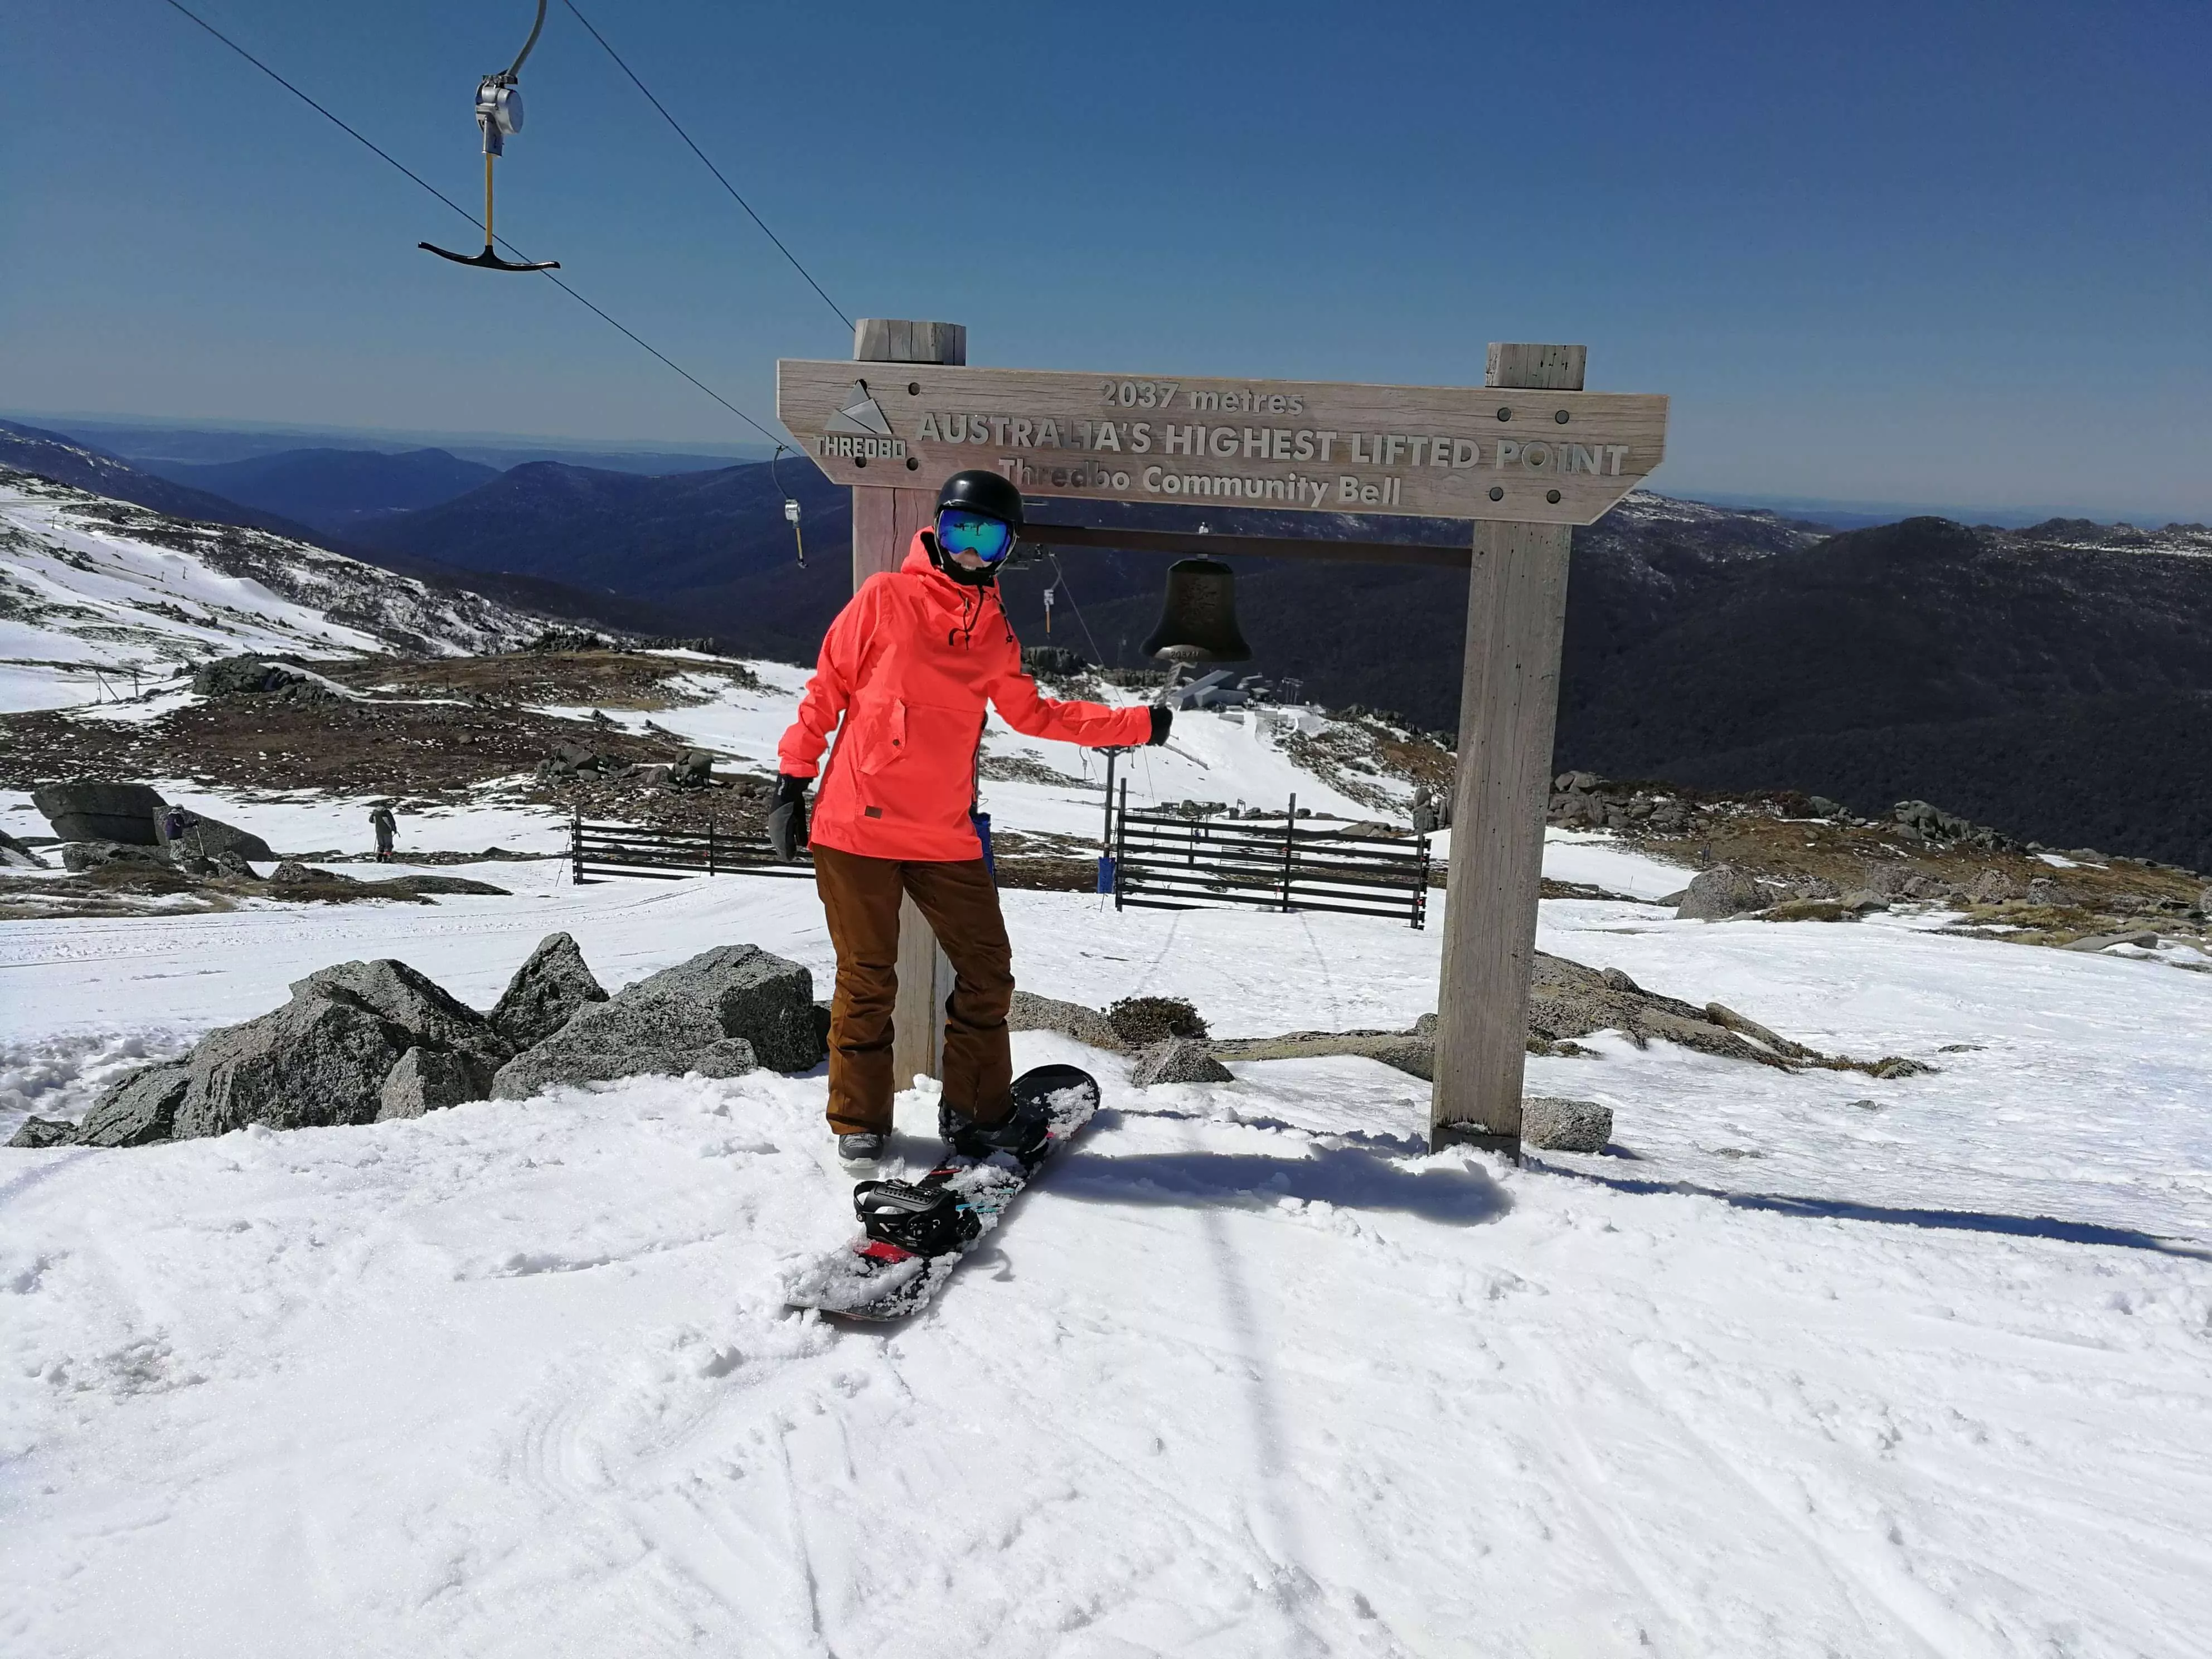 Thredbo in Australia, Australia and Oceania | Skiing,Mountain Biking,Snowkiting - Rated 7.4